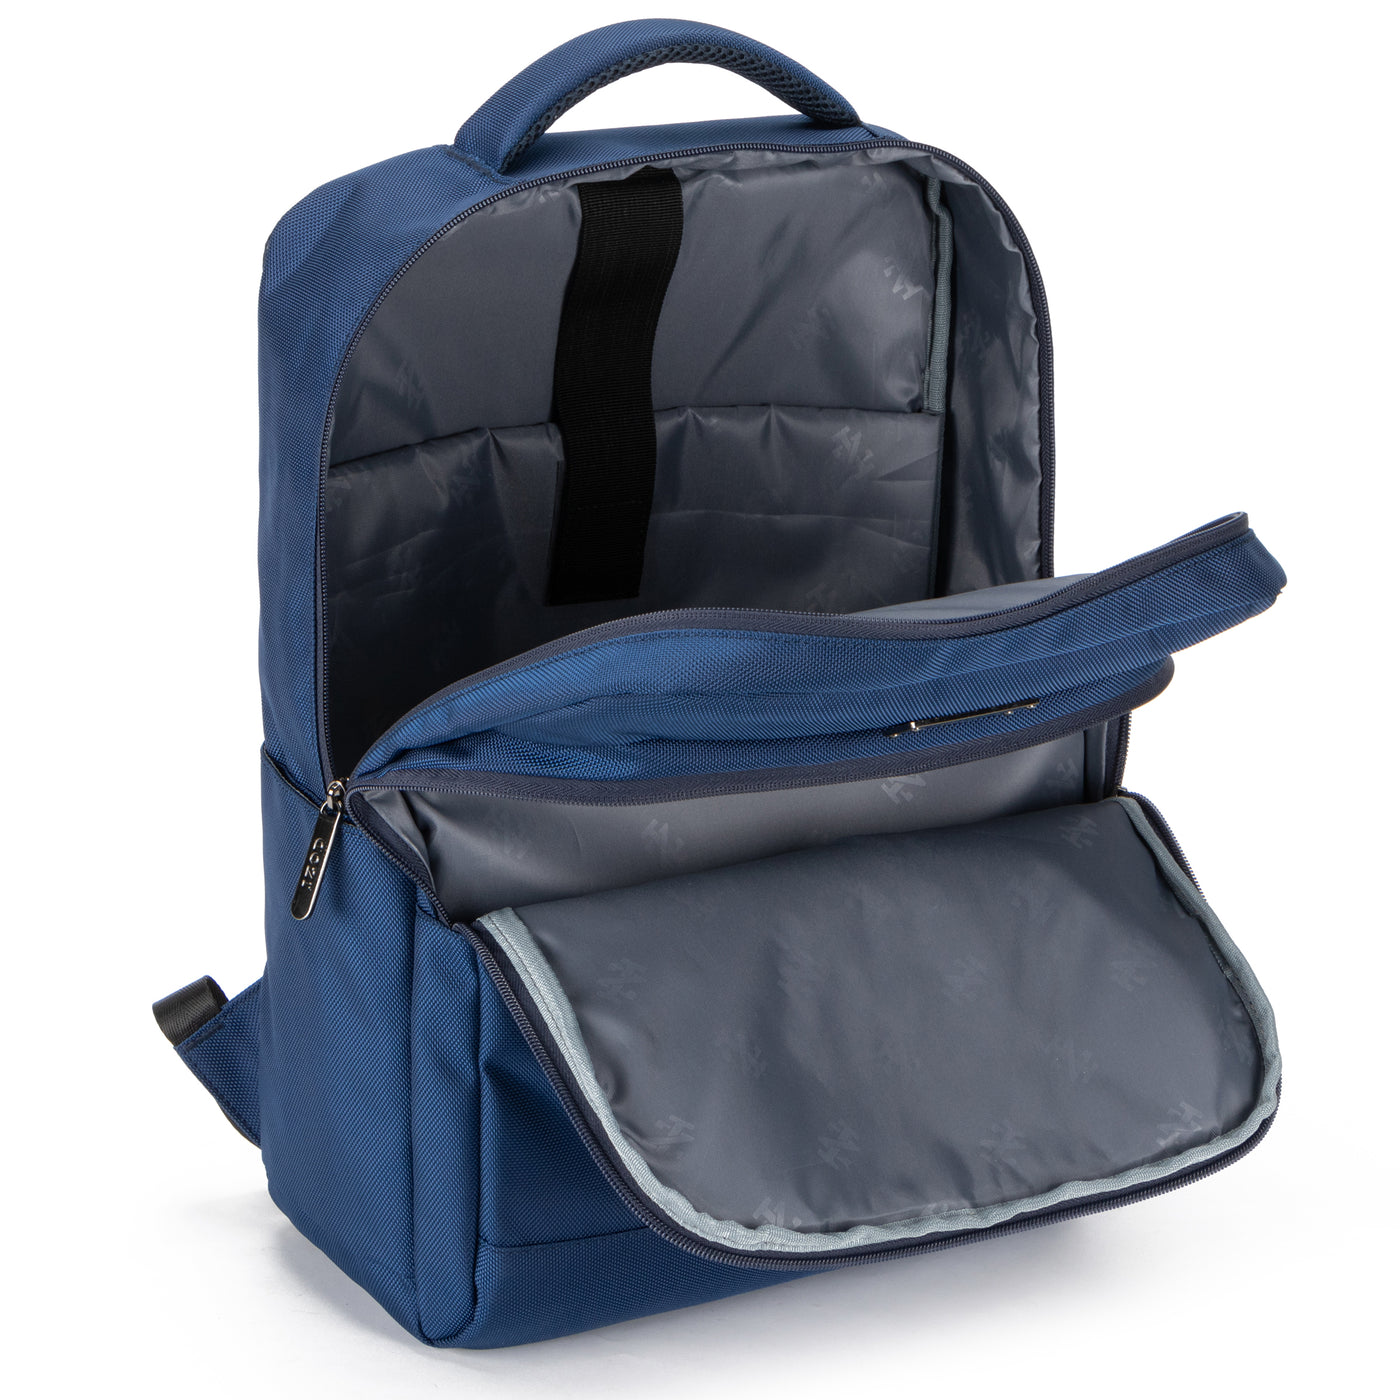 IZOD ALCI Business Travel Slim Durable Laptop Backpack USB Charging Port, Computer Bag Fits 15.6 Inch Laptop Notebook